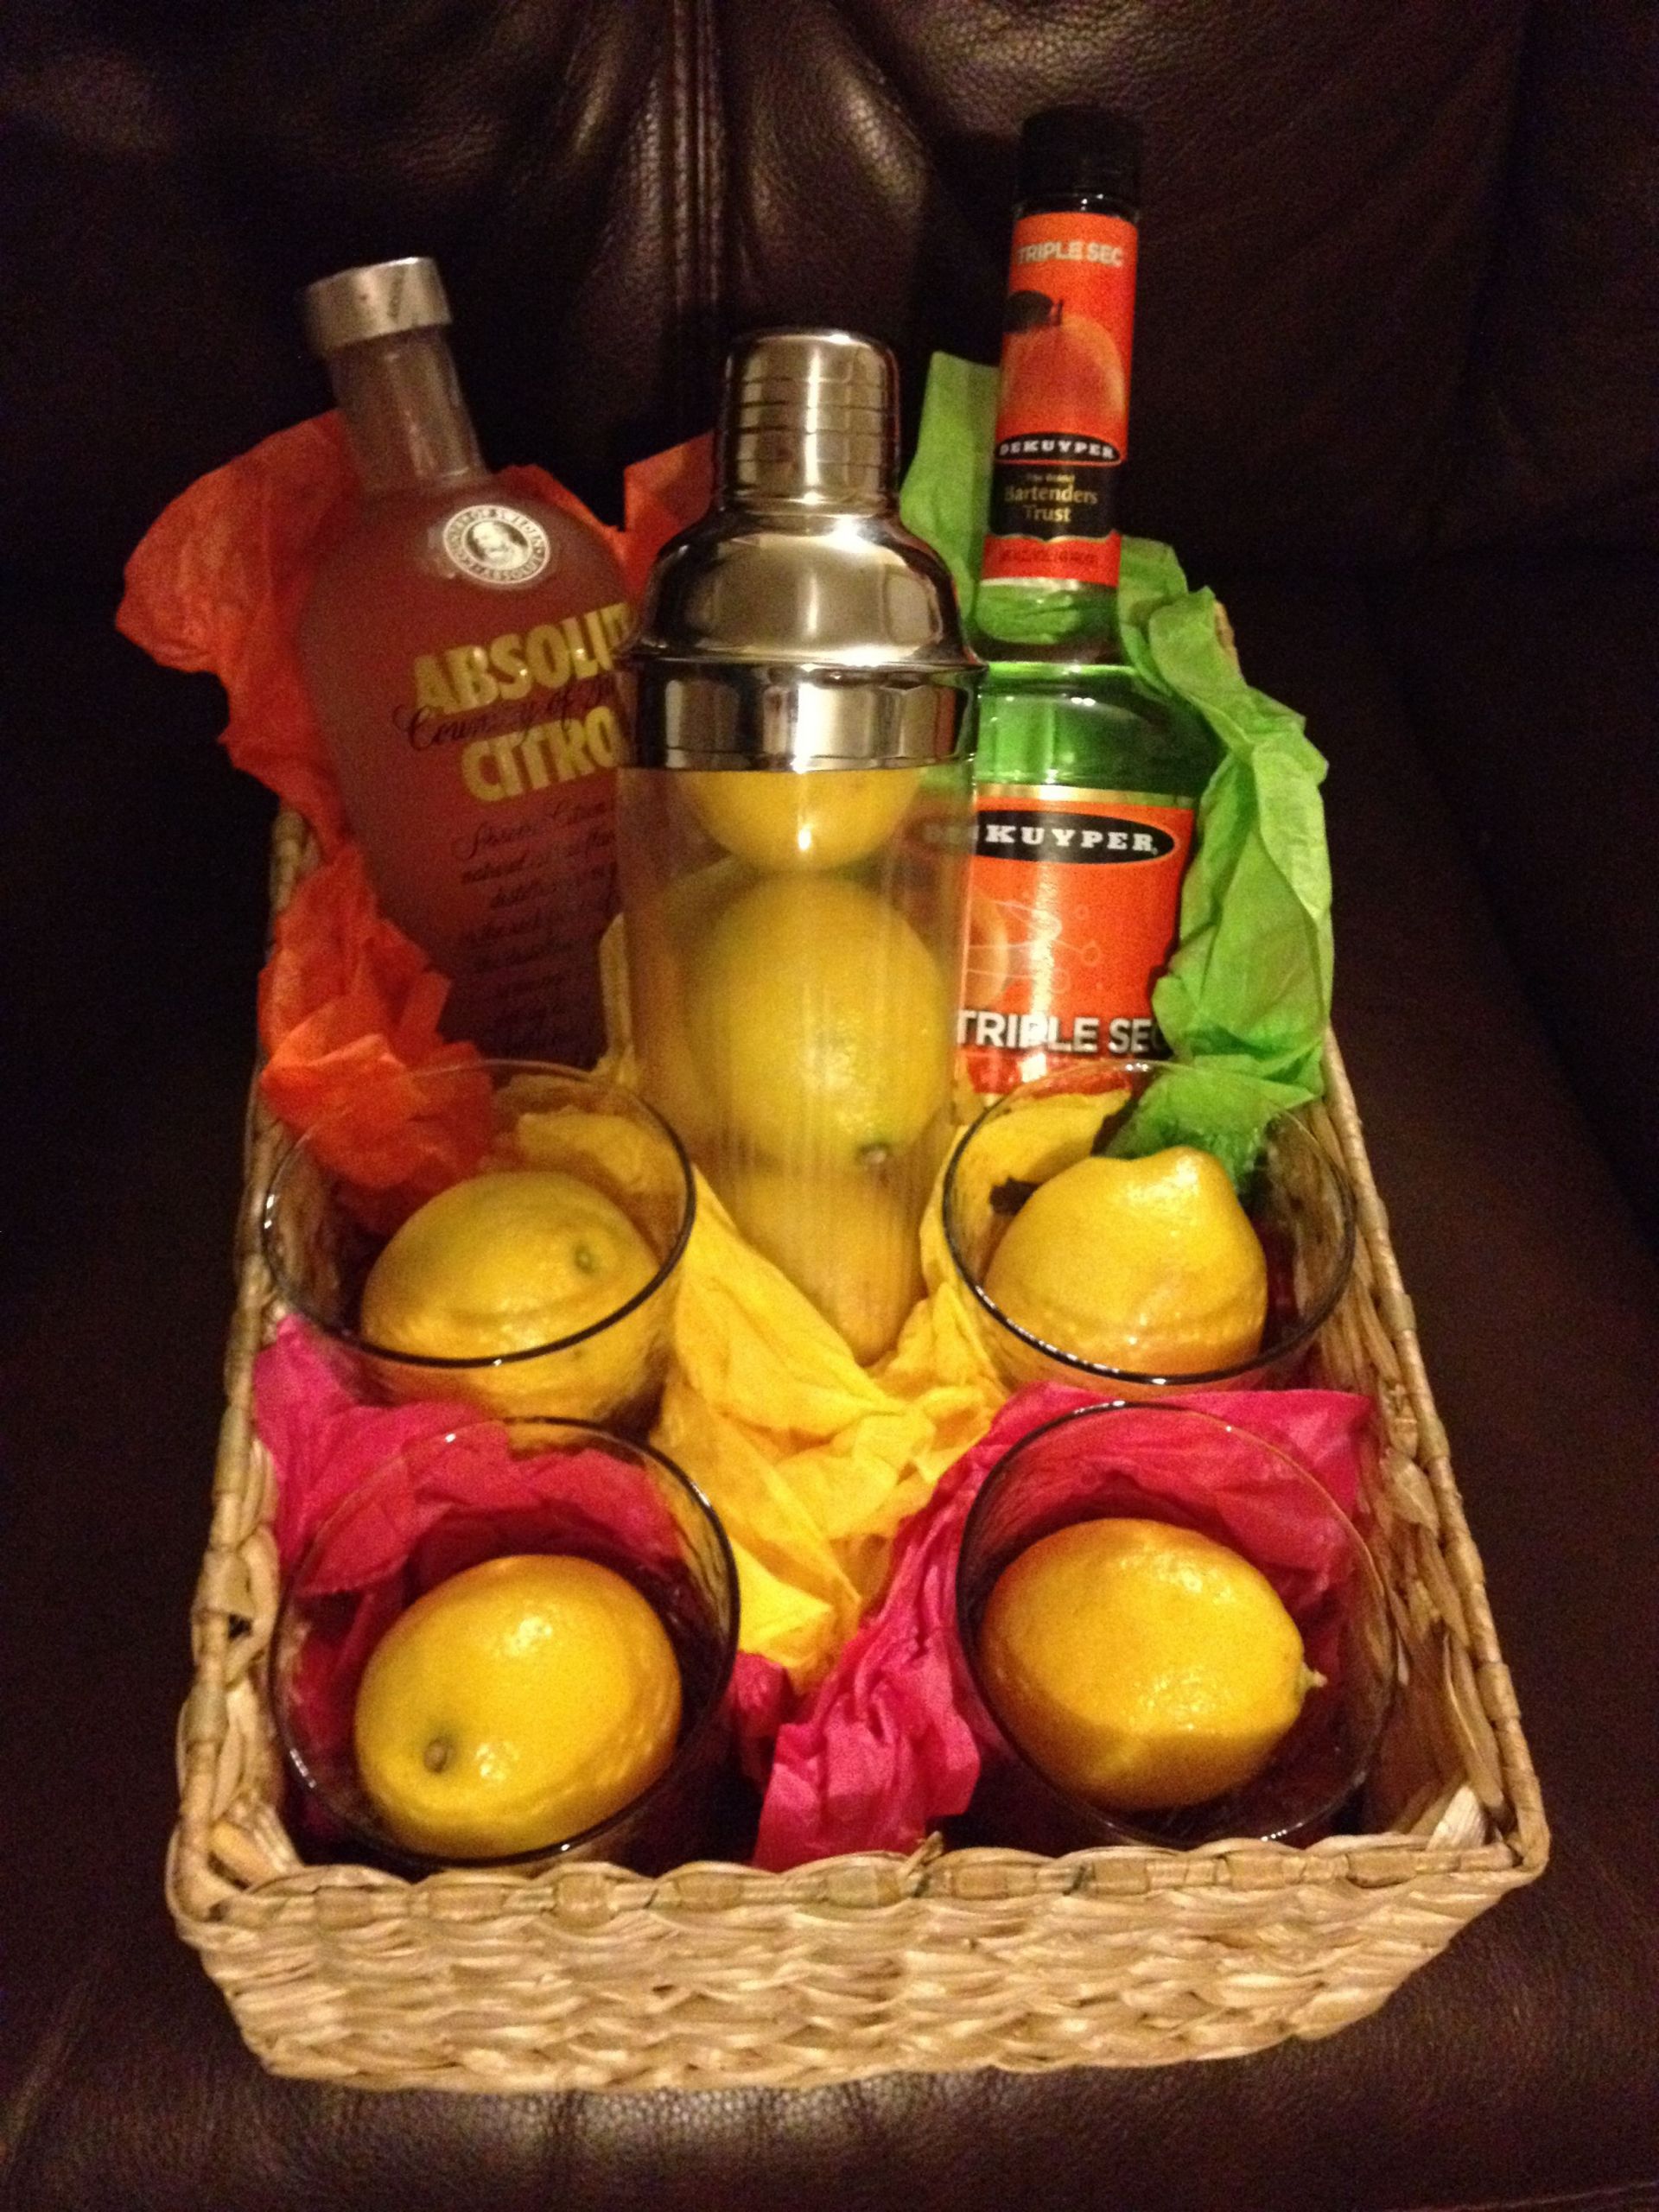 Martini Gift Basket Ideas
 Lemon drop martini t basket